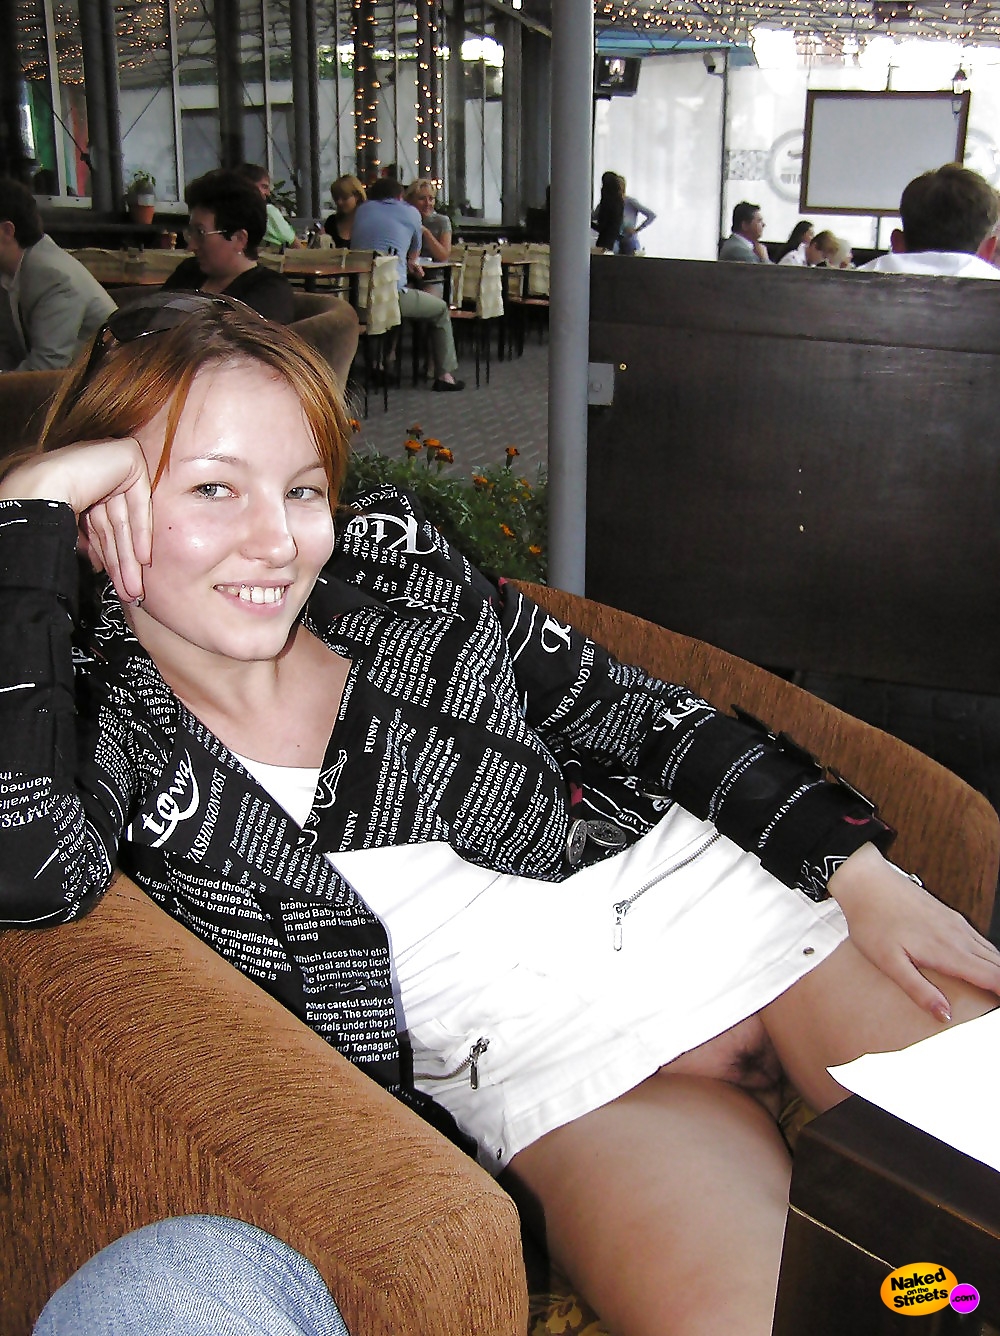 Cheeky girlfriend flashing pussy in restaurant photo